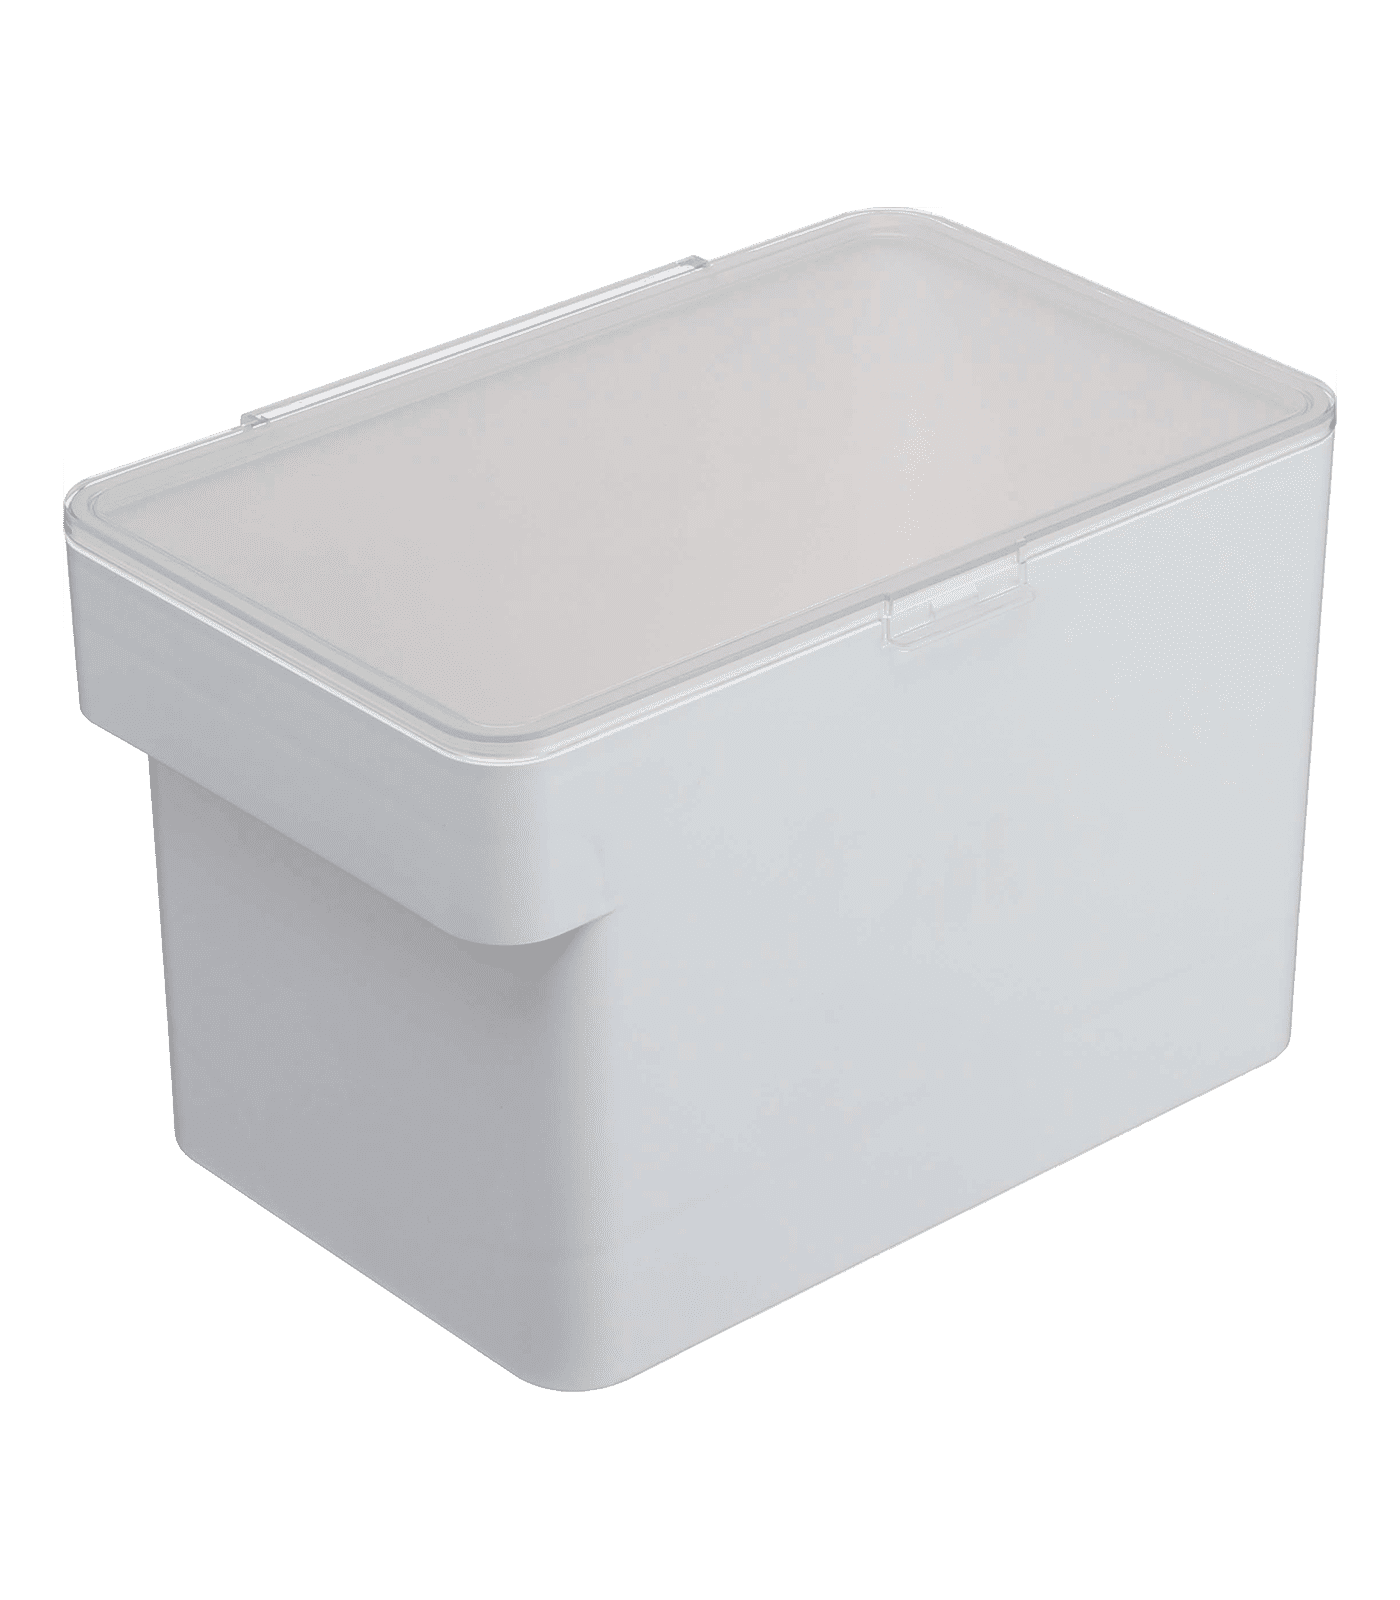 Yamazaki Home 0.8 Gallon Airtight Pet Food Storage Container - White